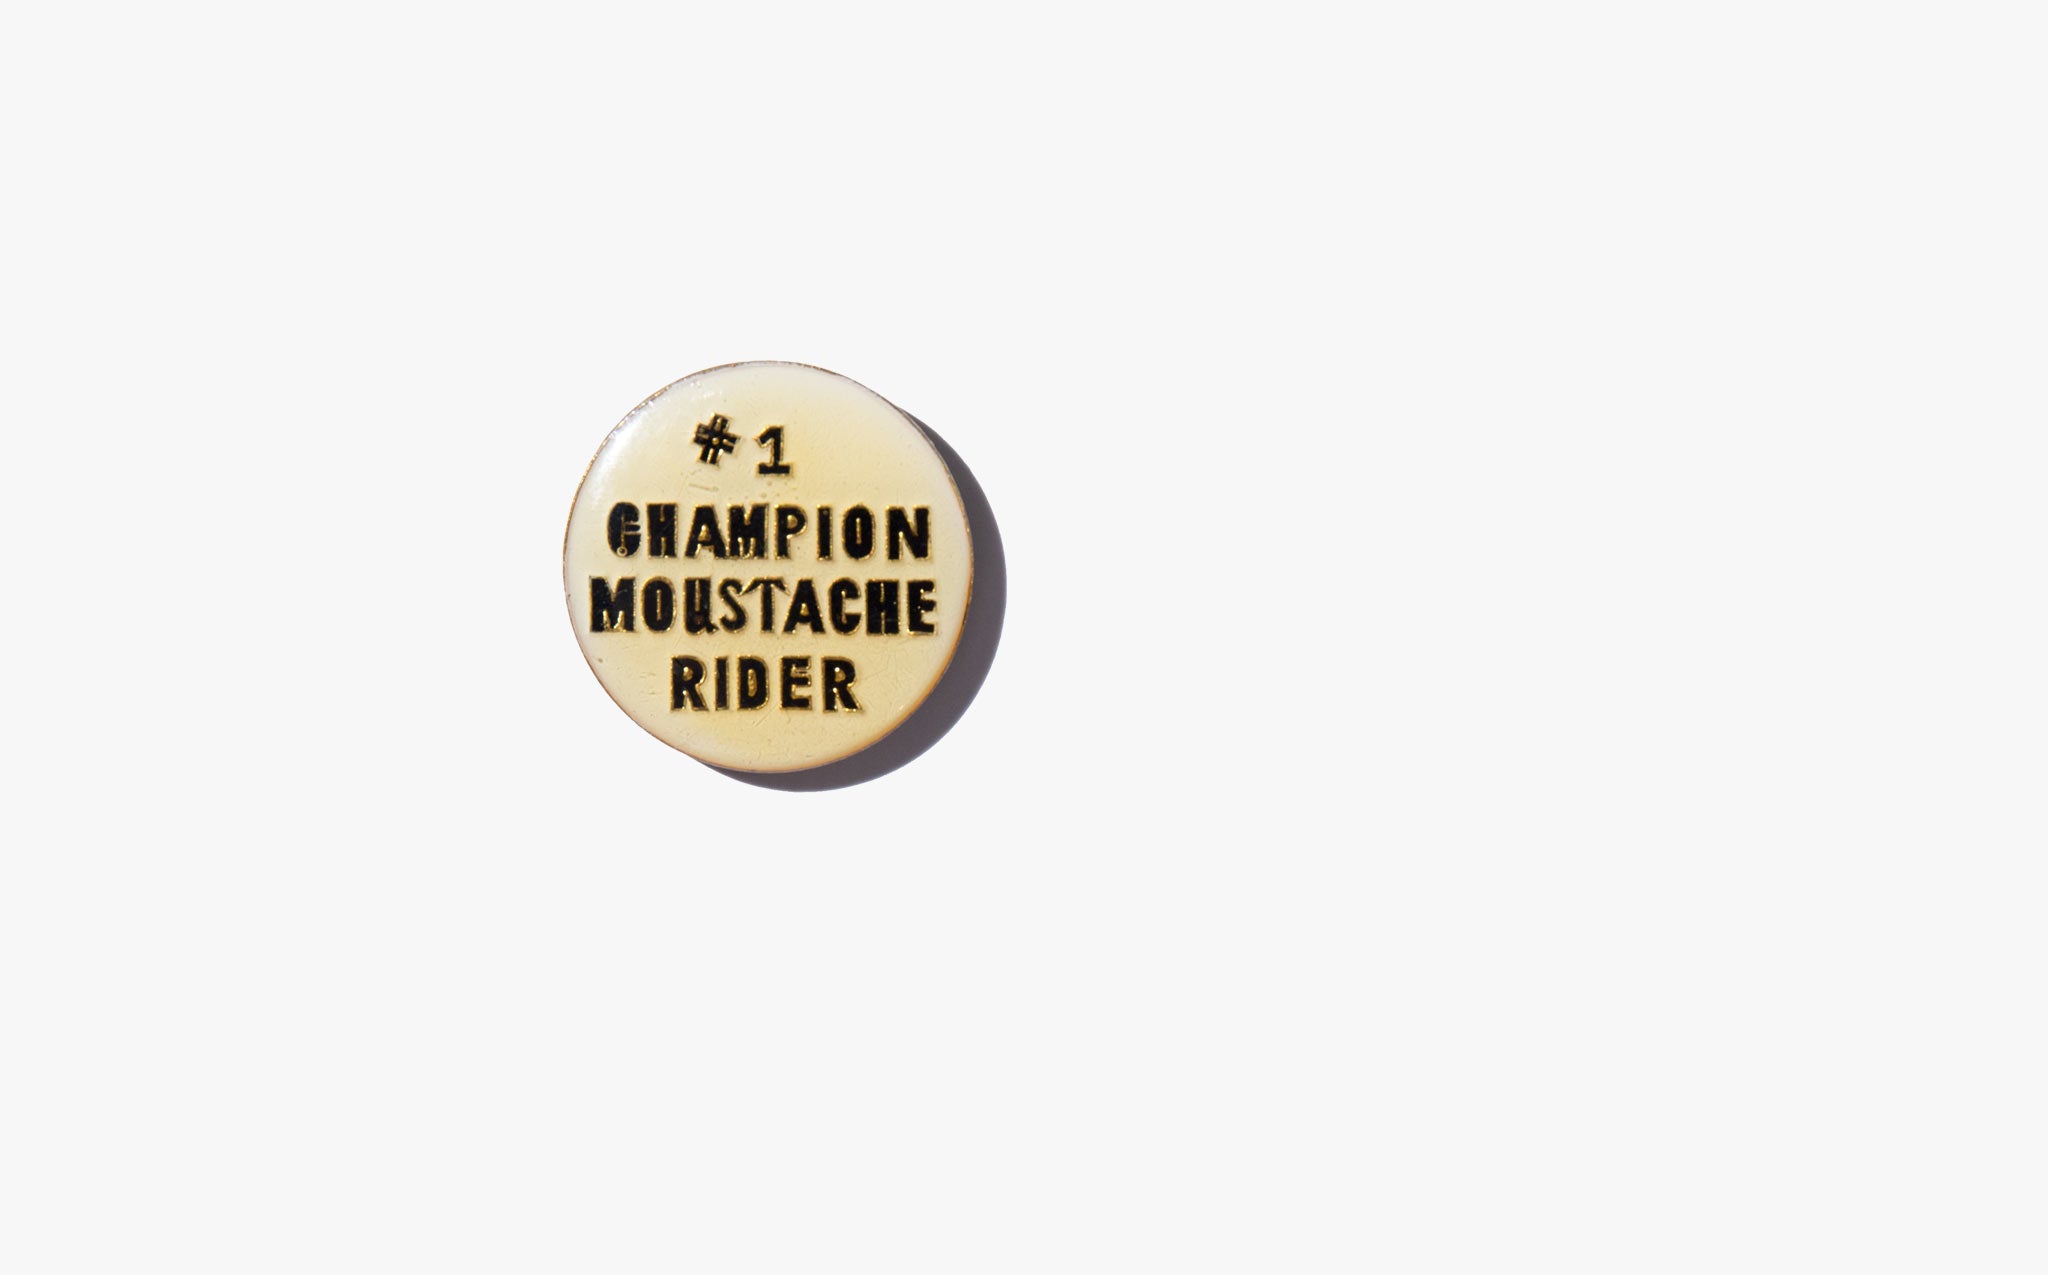 Champion Moustache Rider Vintage Pin